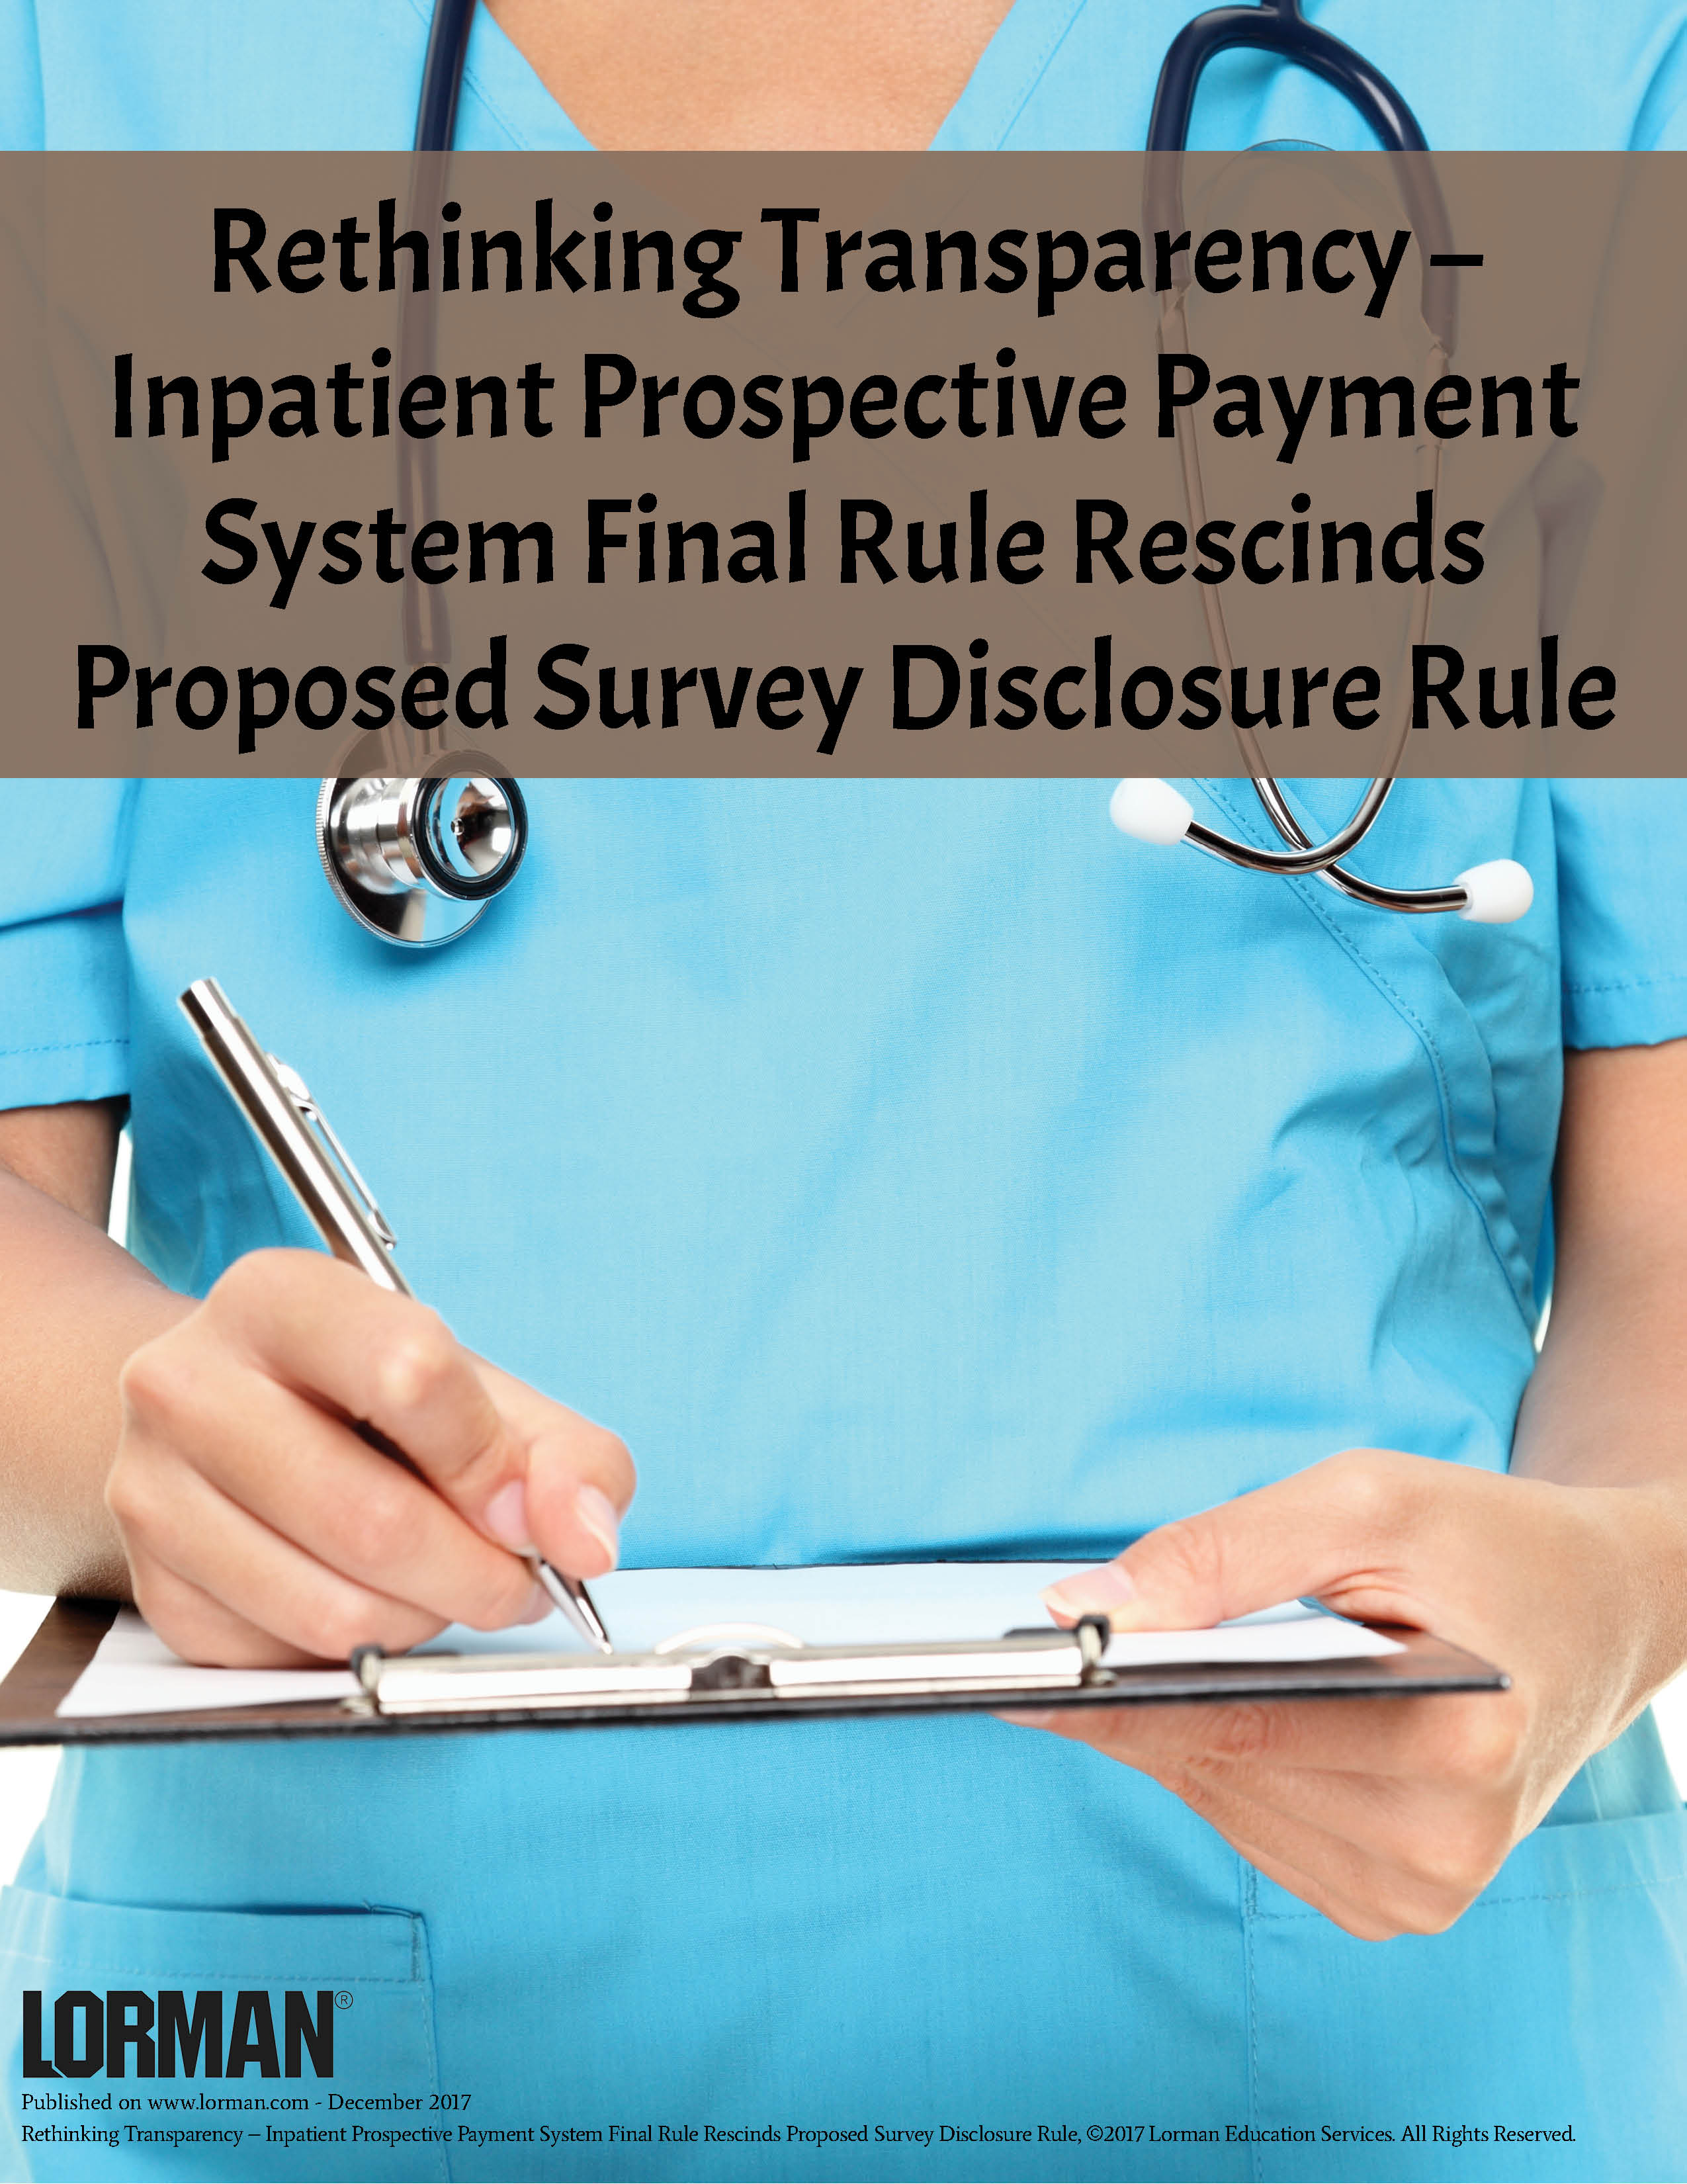 Inpatient Prospective Payment System Final Rule Rescinds Proposed Survey Disclosure Rule